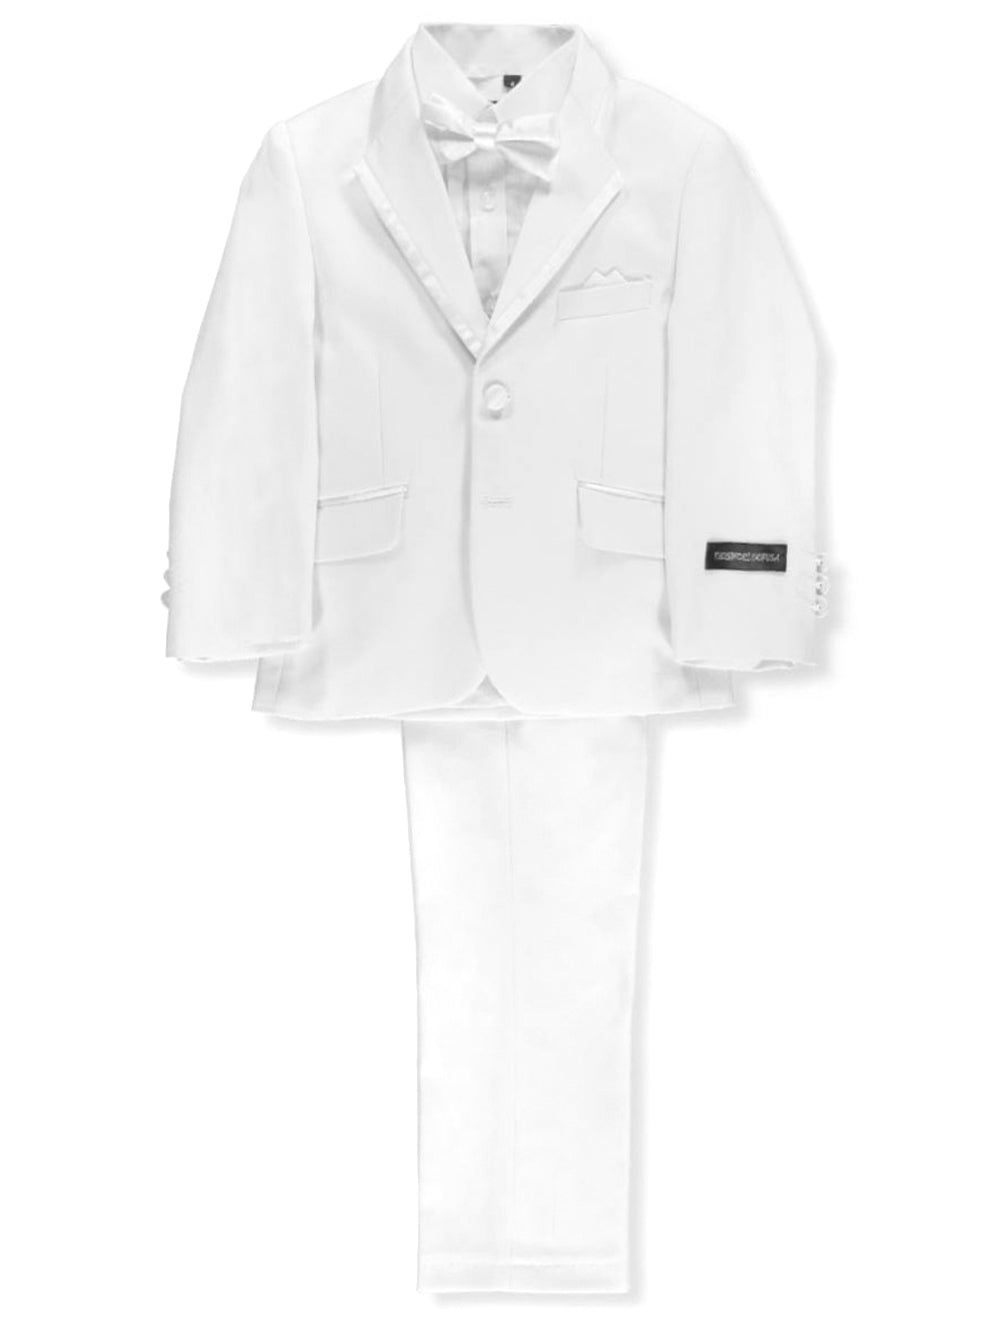 The White Suit Formal Boys Suit